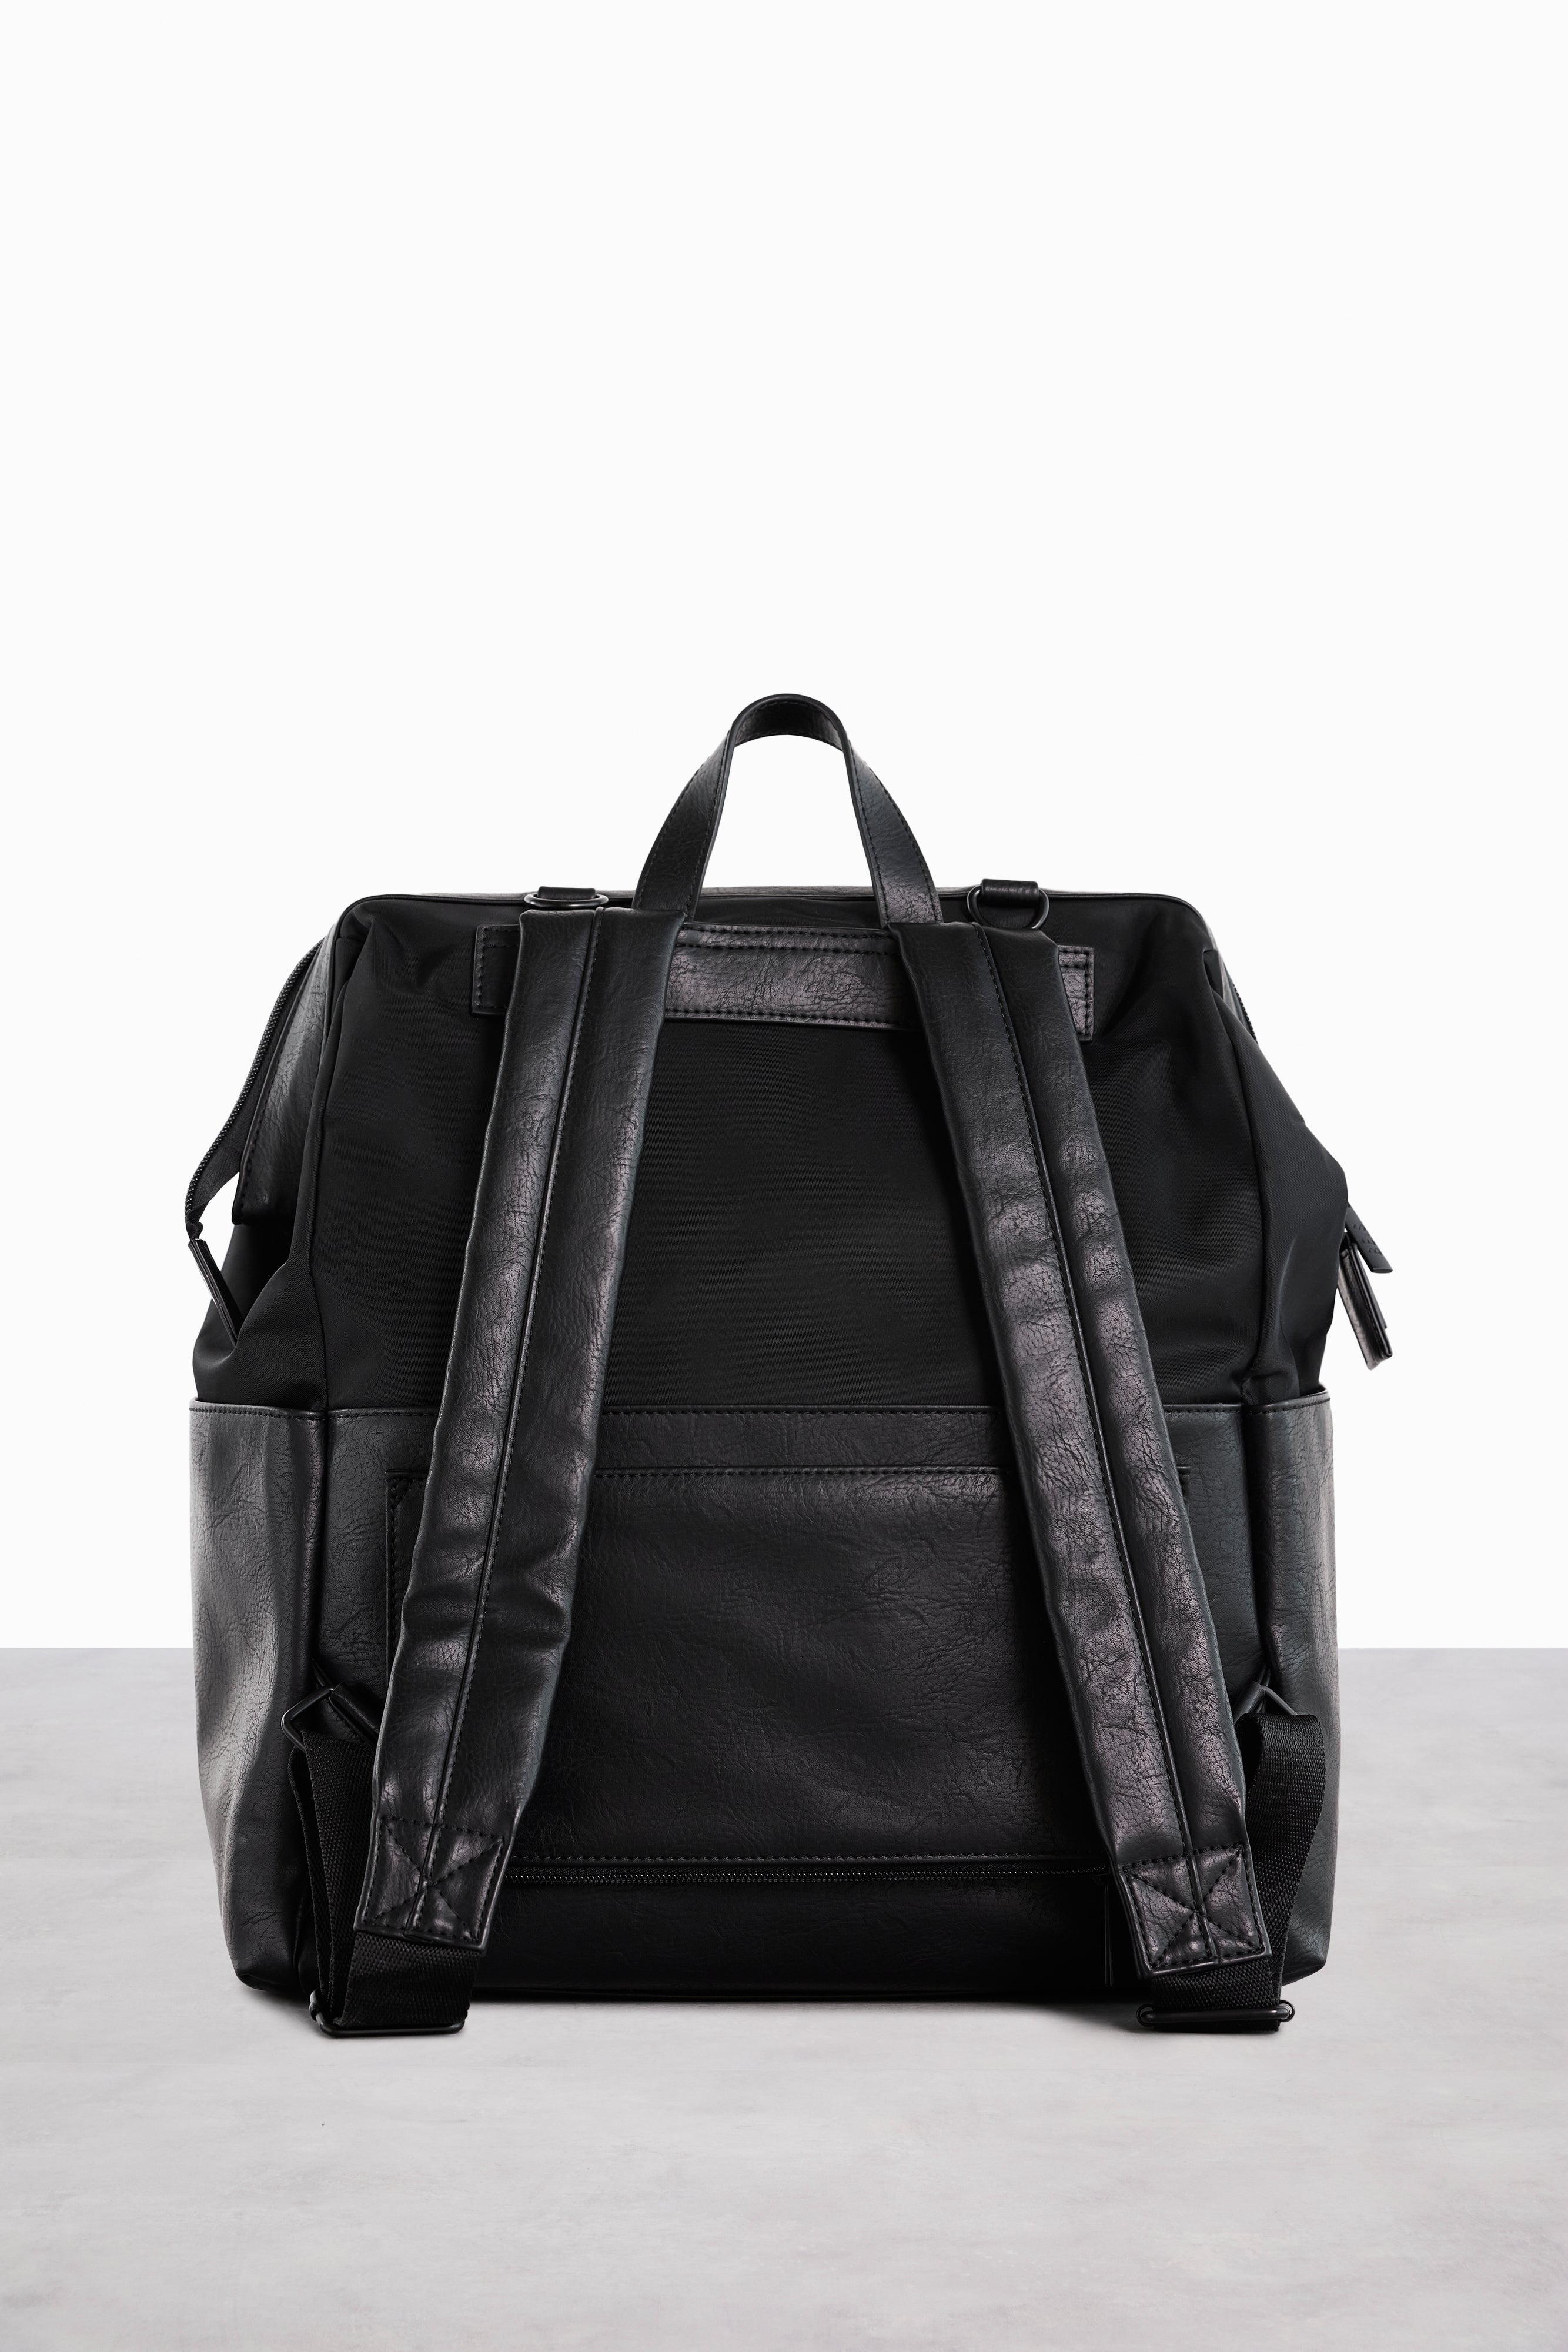 BÉIS 'The Diaper Backpack' in Black - Black Diaper Bag & Baby Bag